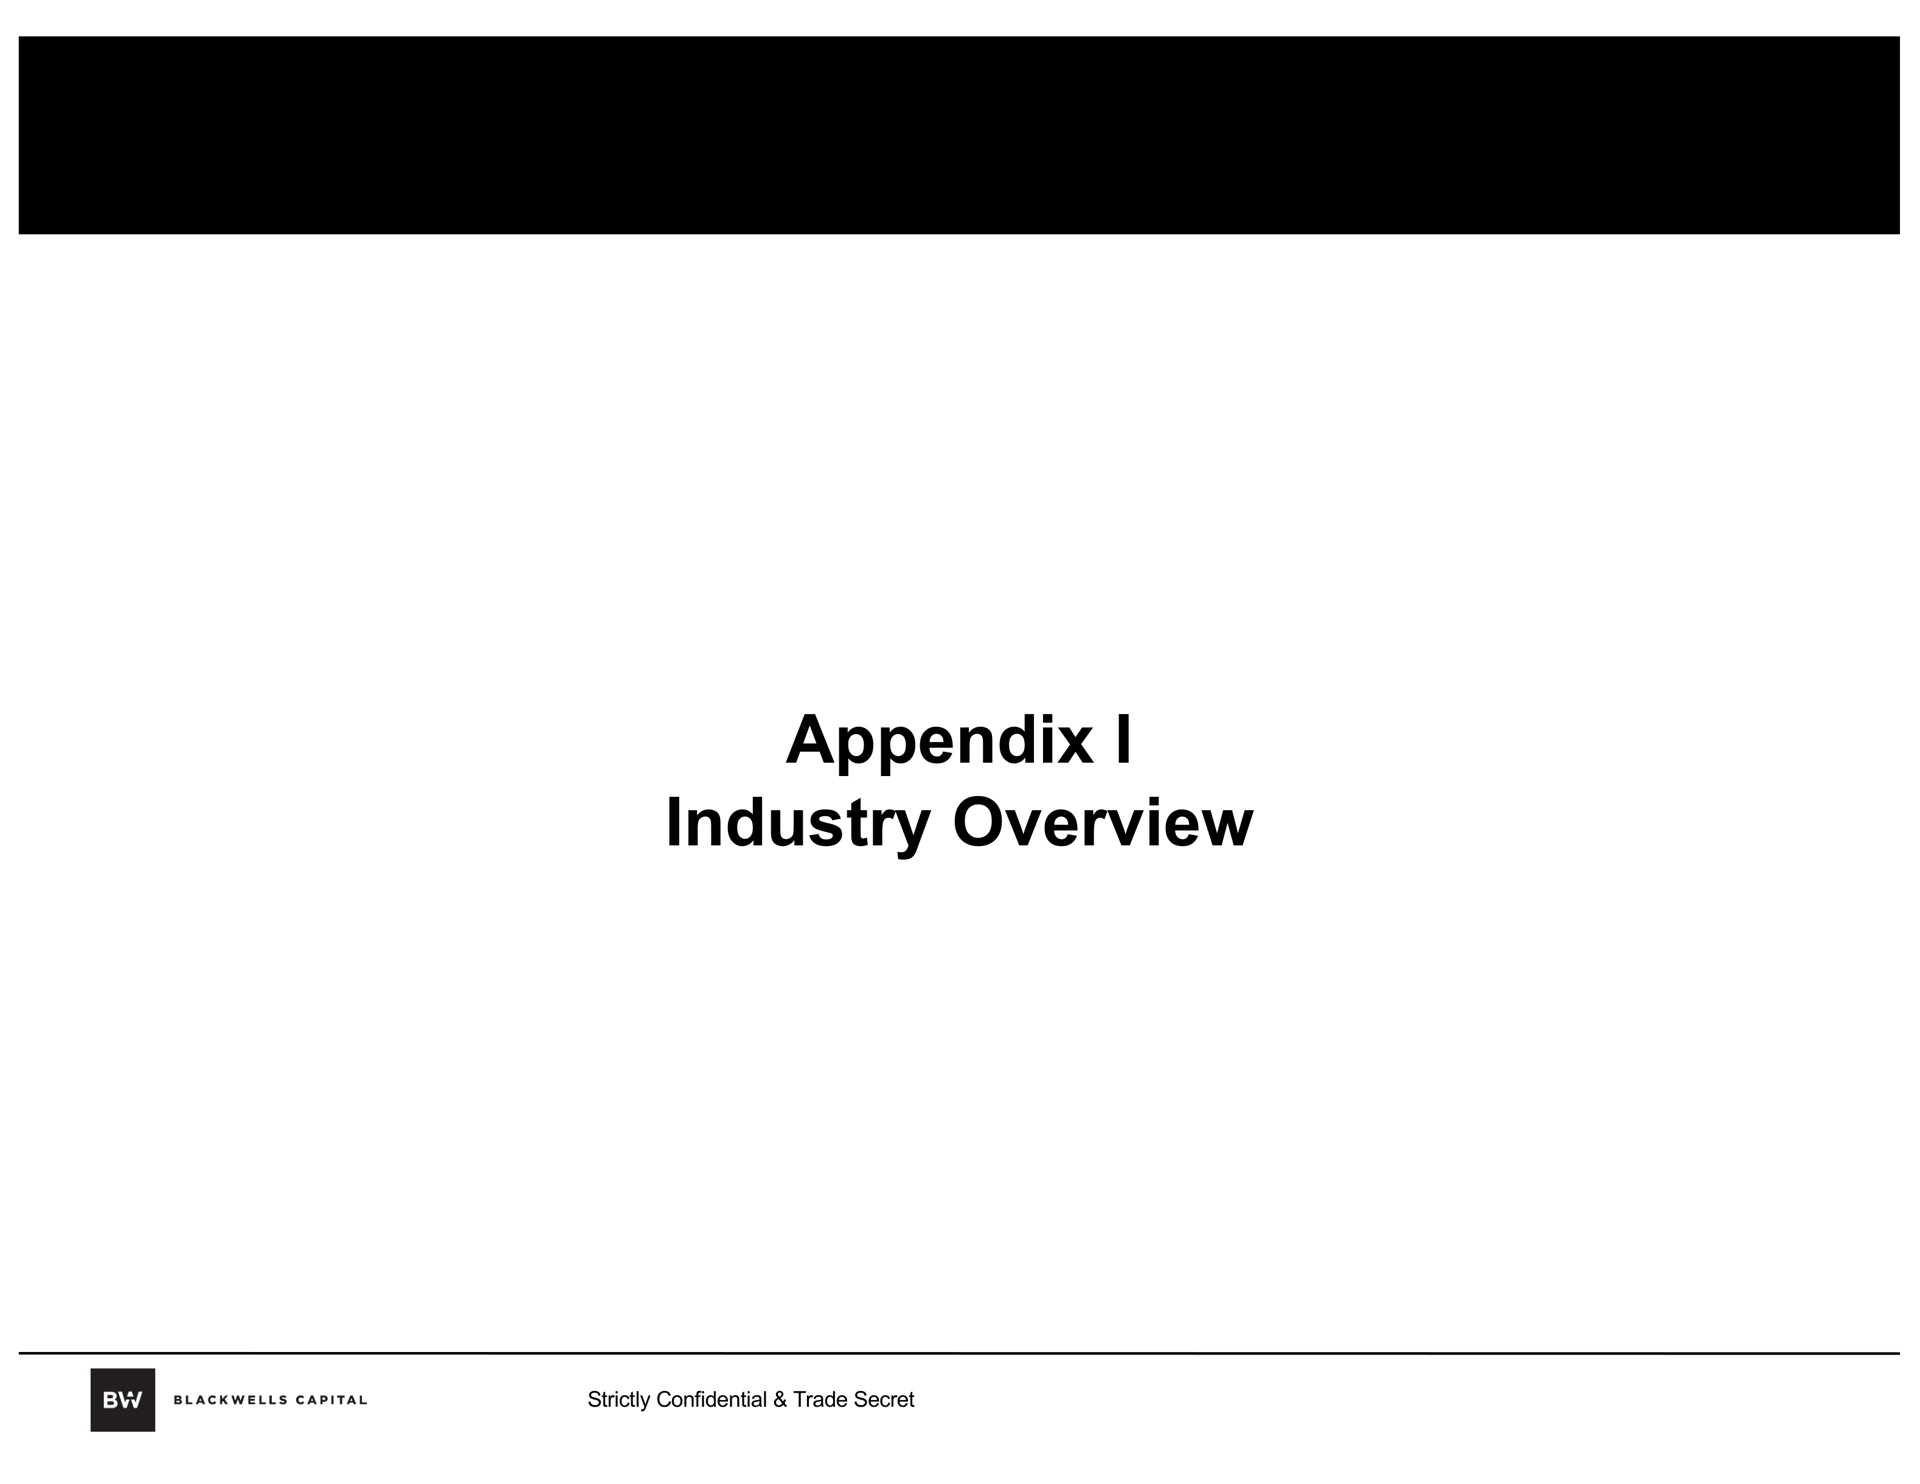 appendix i industry overview | Blackwells Capital